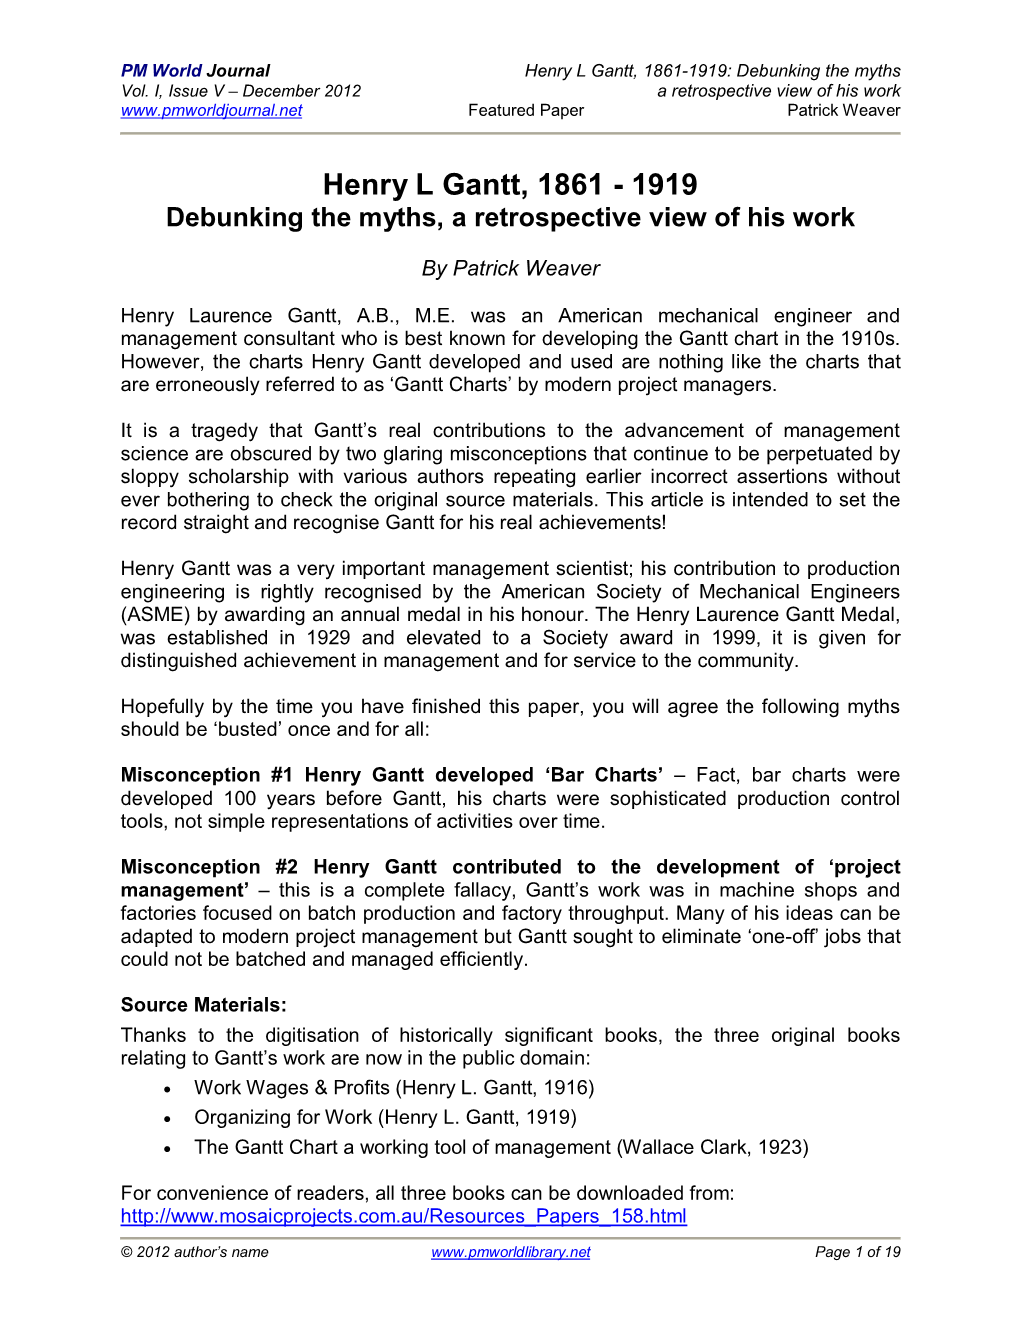 Henry L Gantt, 1861-1919: Debunking the Myths Vol